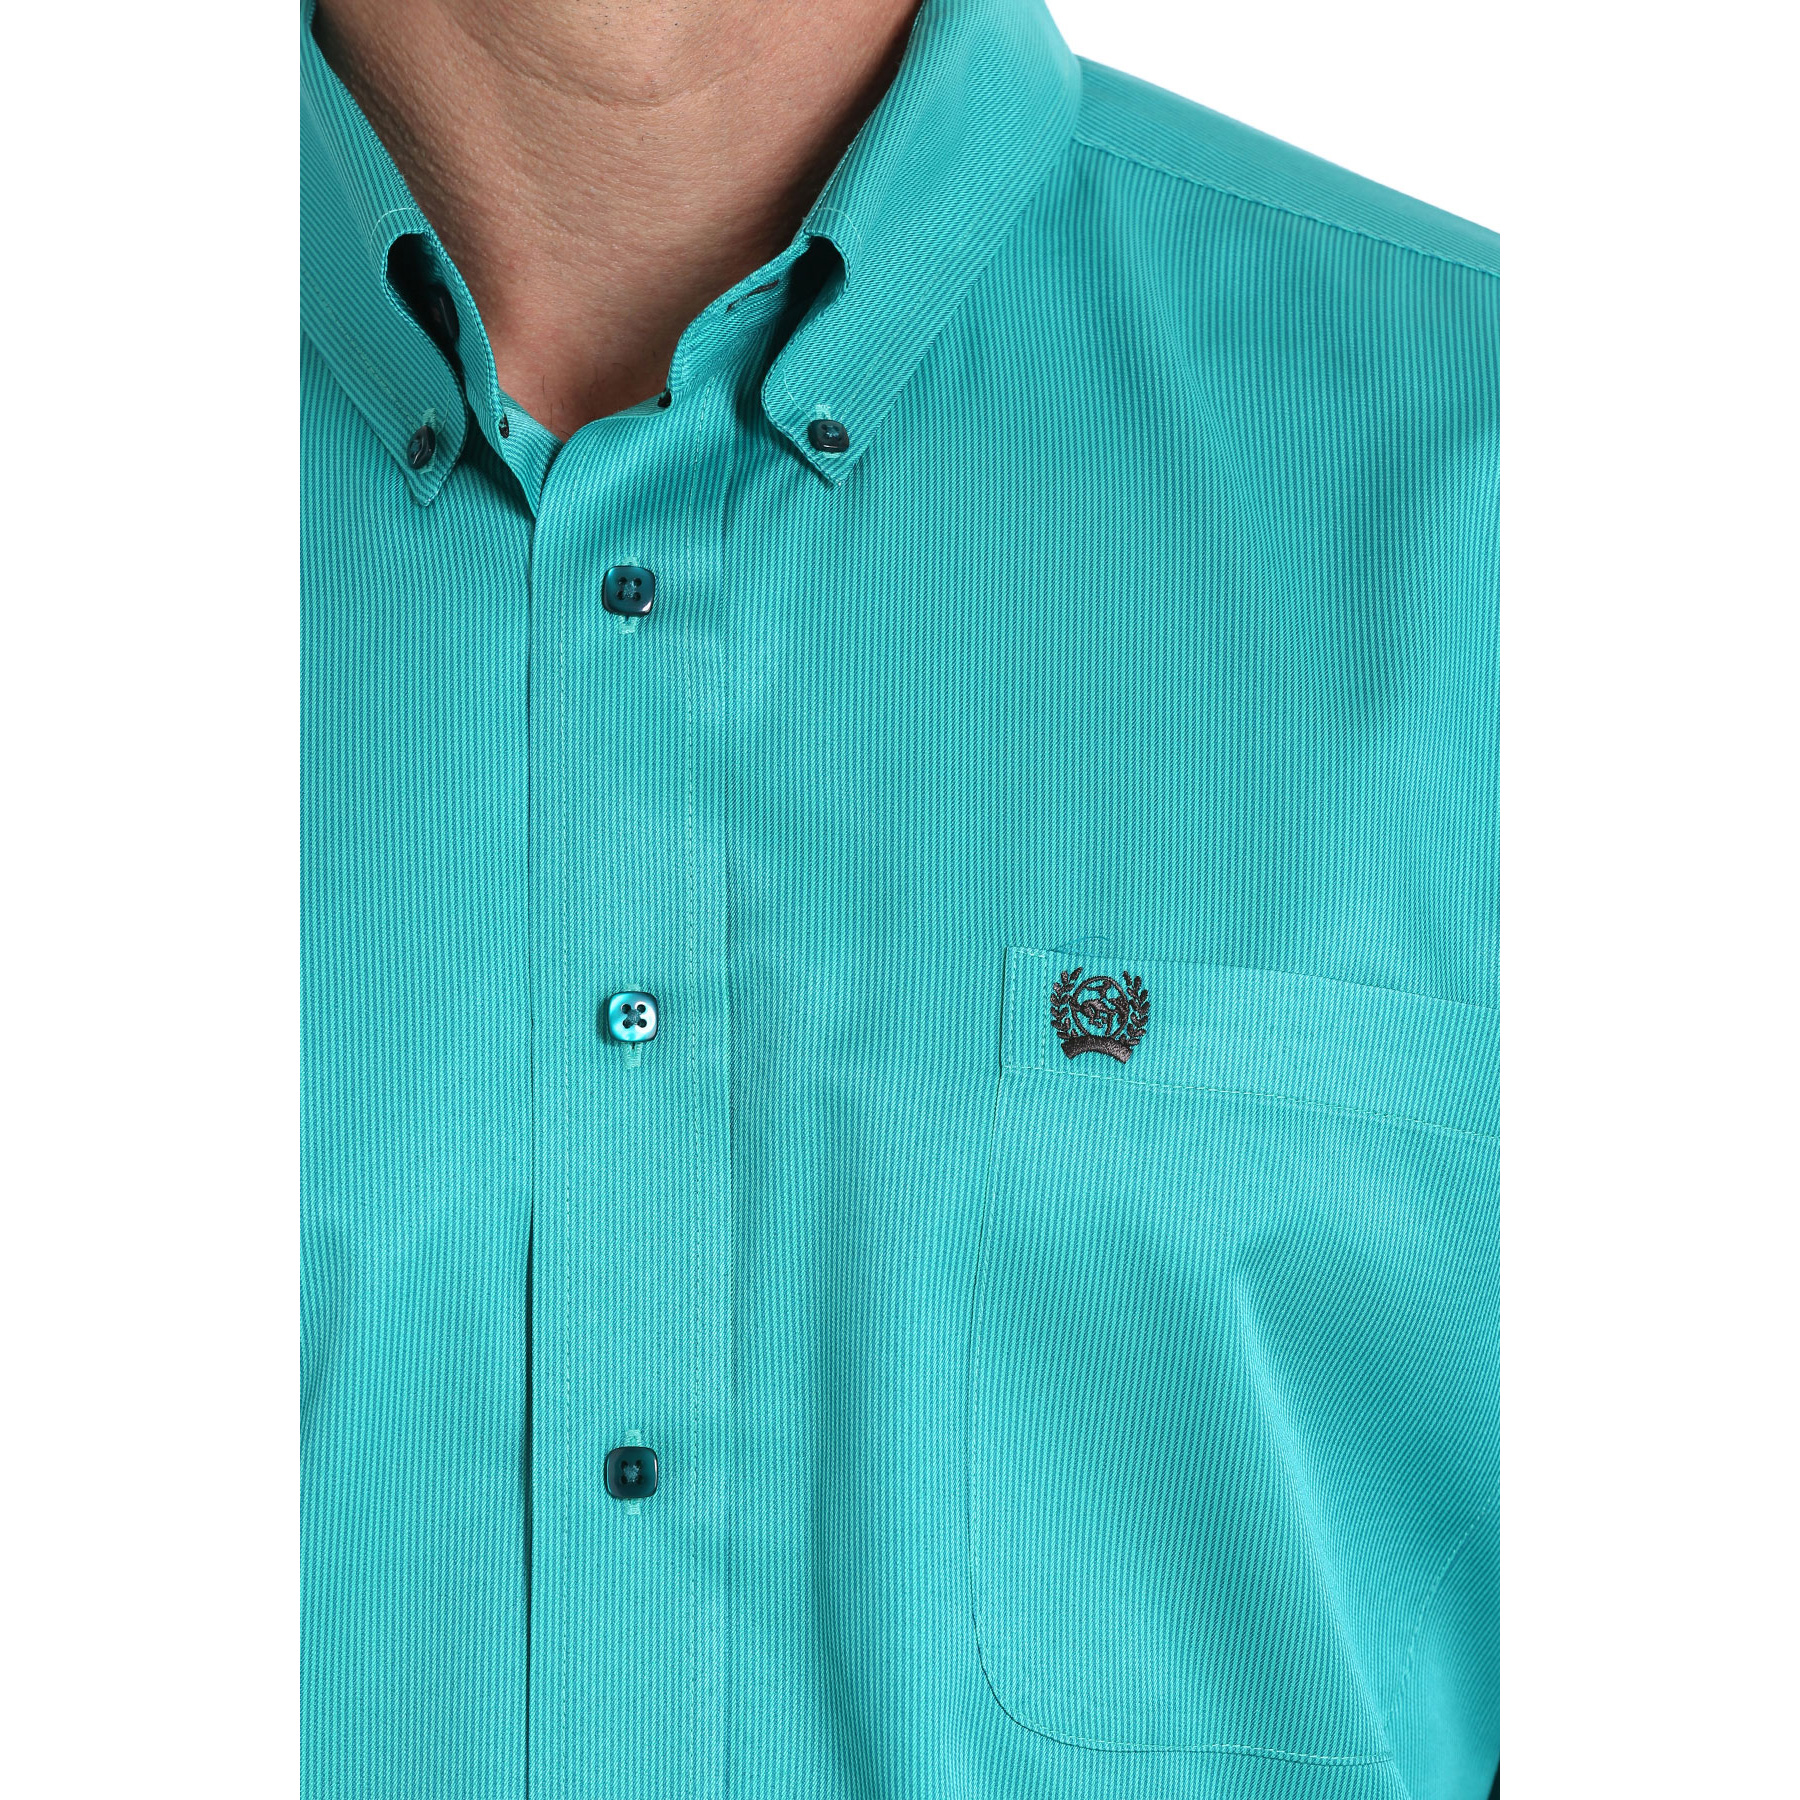 Pungo Ridge - Cinch Men's L/S Stripe Button-Down Shirt - Teal, Cinch ...